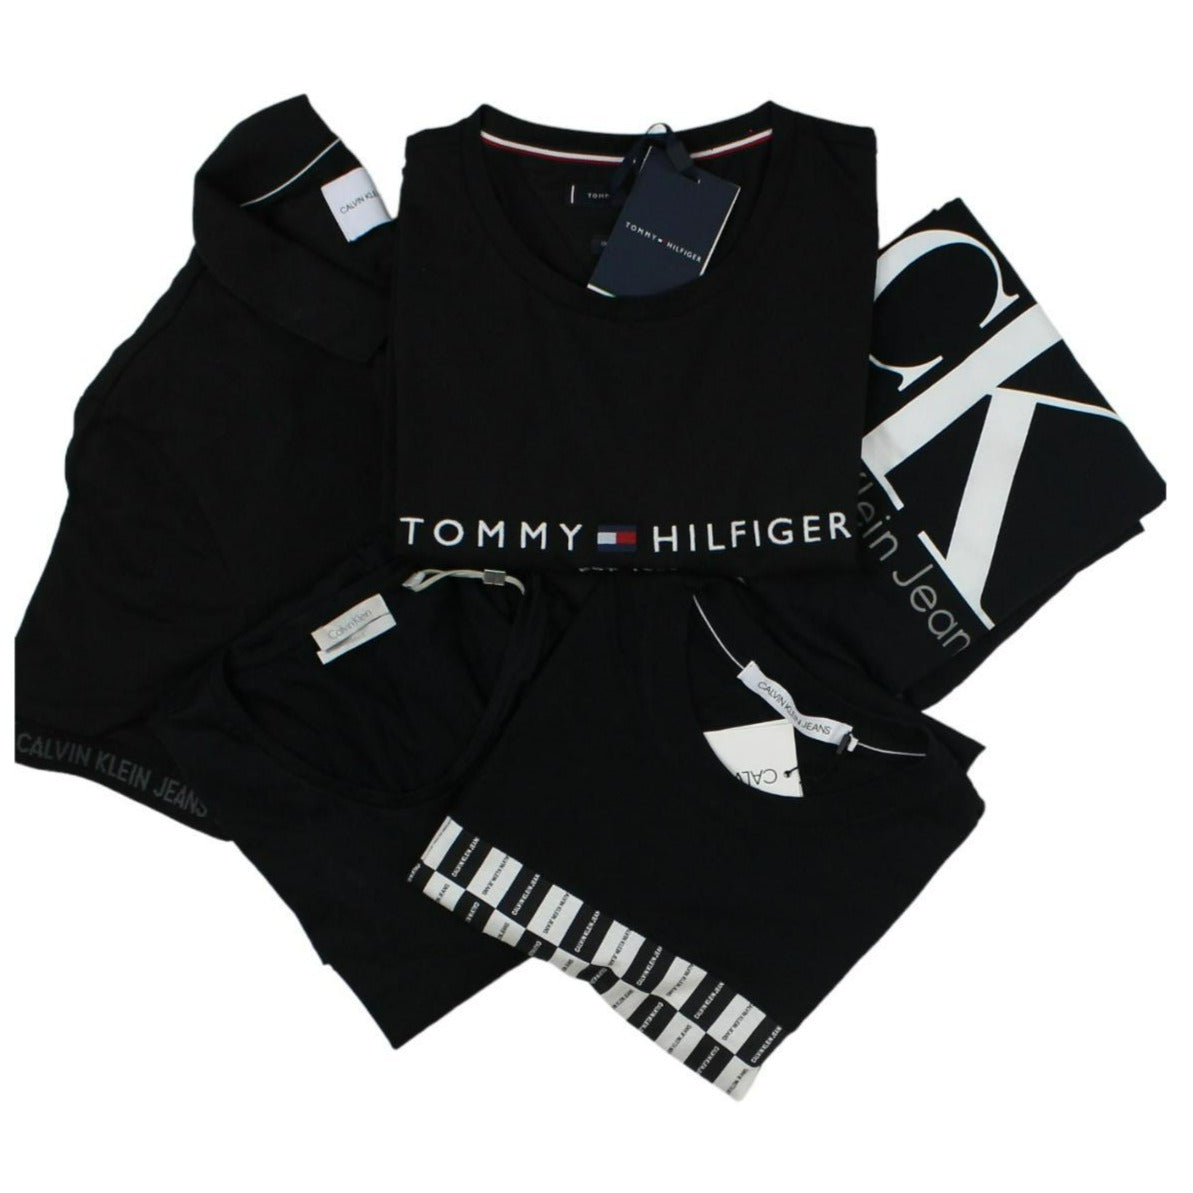 x6 Mixed Gender Tommy Hilfiger & Calvin Klein Black T-shirt & Polo Shirt Bundle